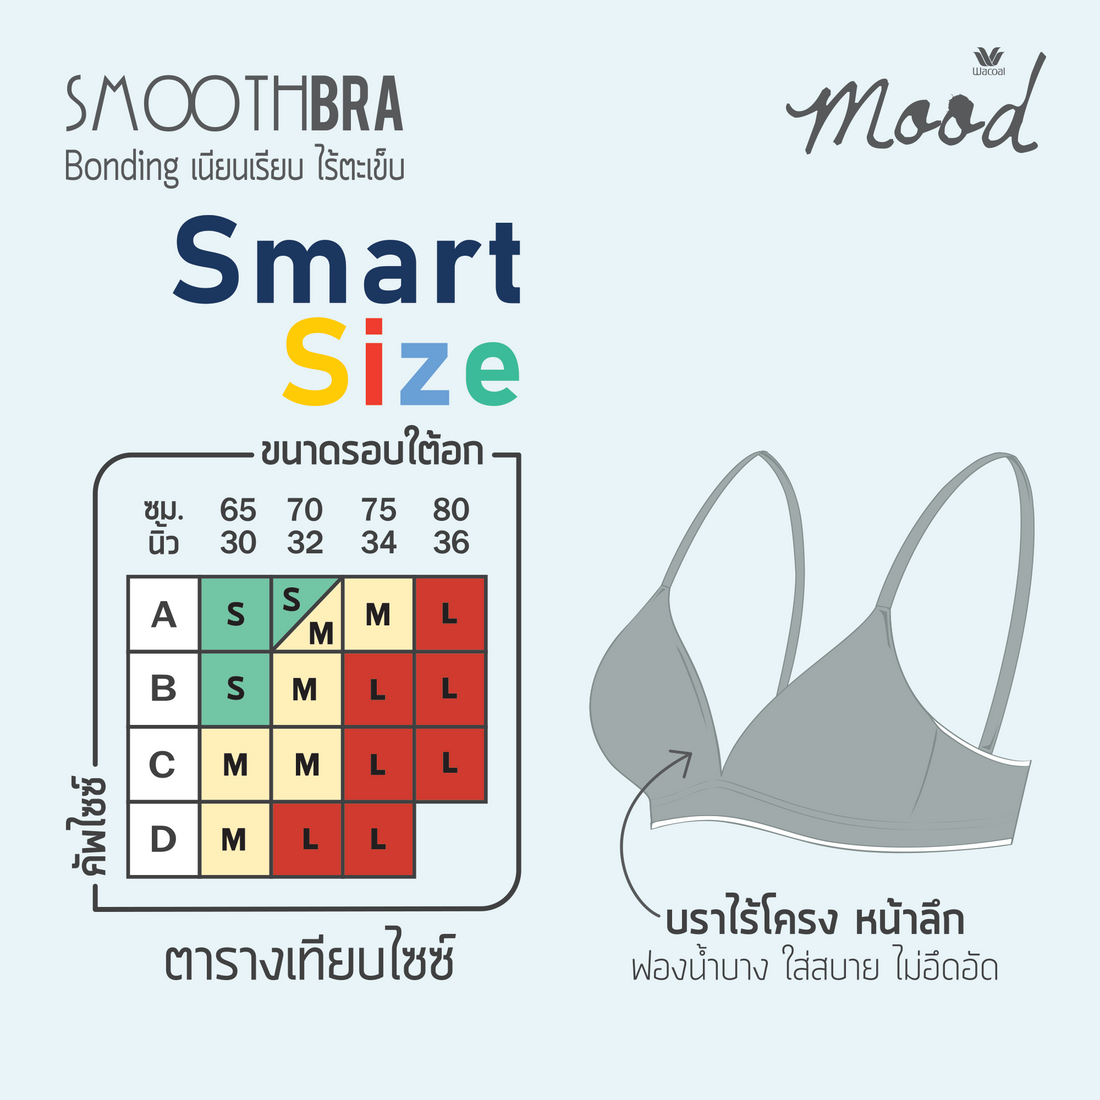 Wacoal Mood Smooth Bra, teenage underwear, seamless bra, model MM1X82 (matching MU3194), beige (BE)